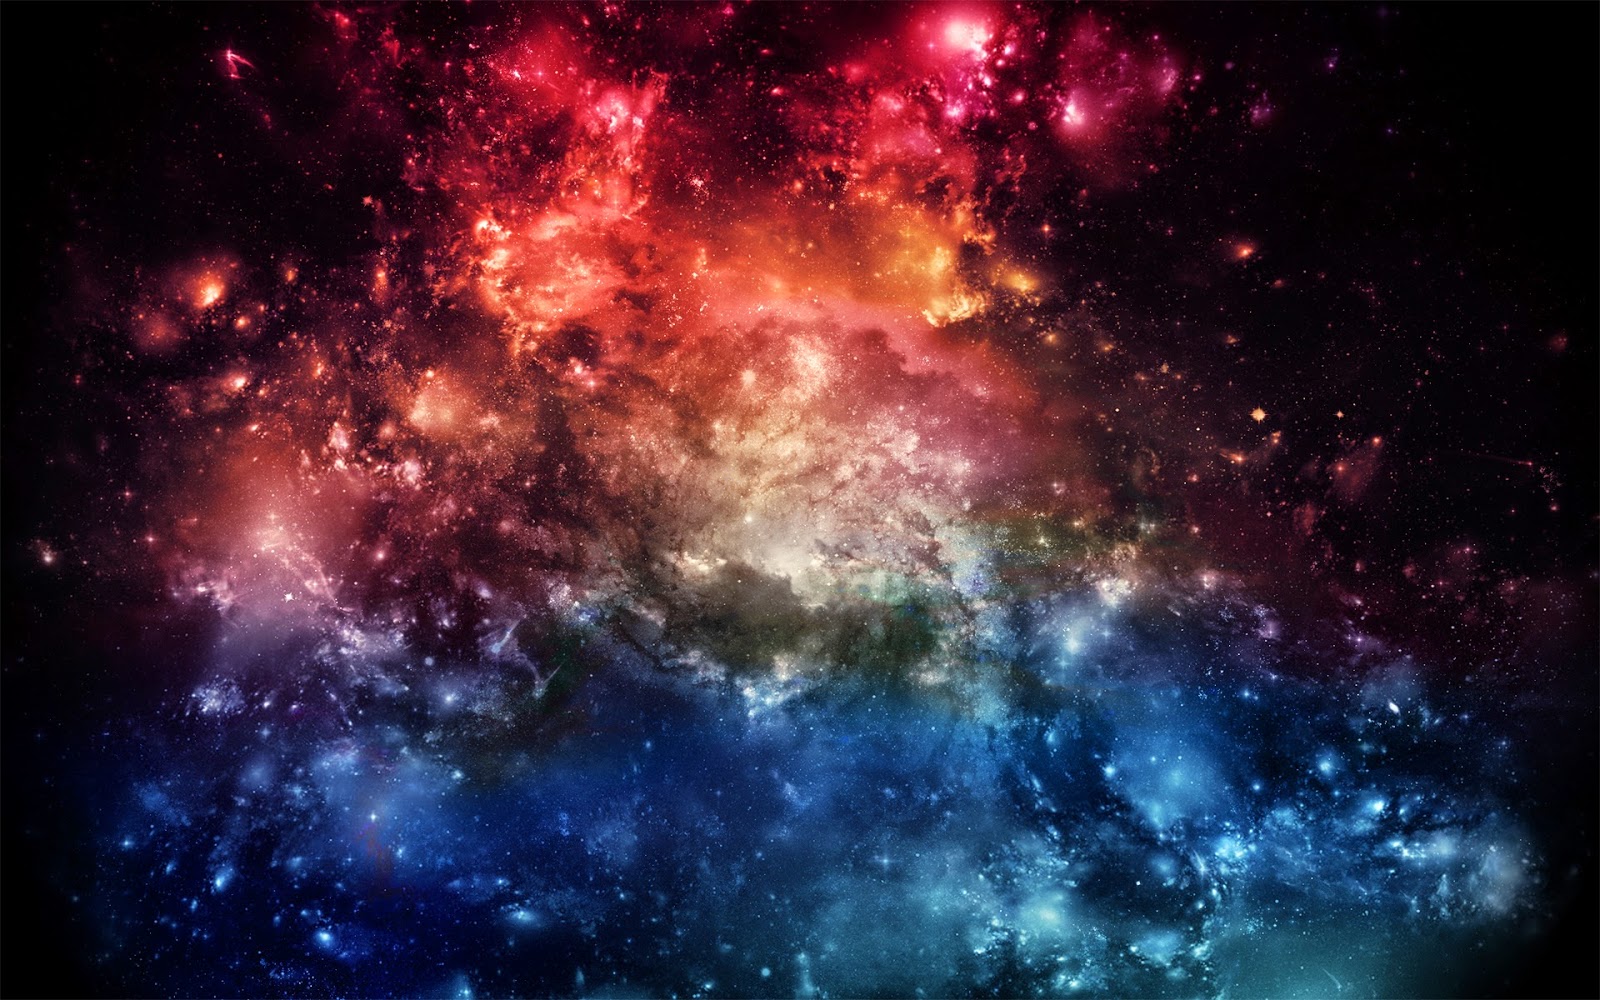 Nebula - HD Wallpapers | Earth Blog